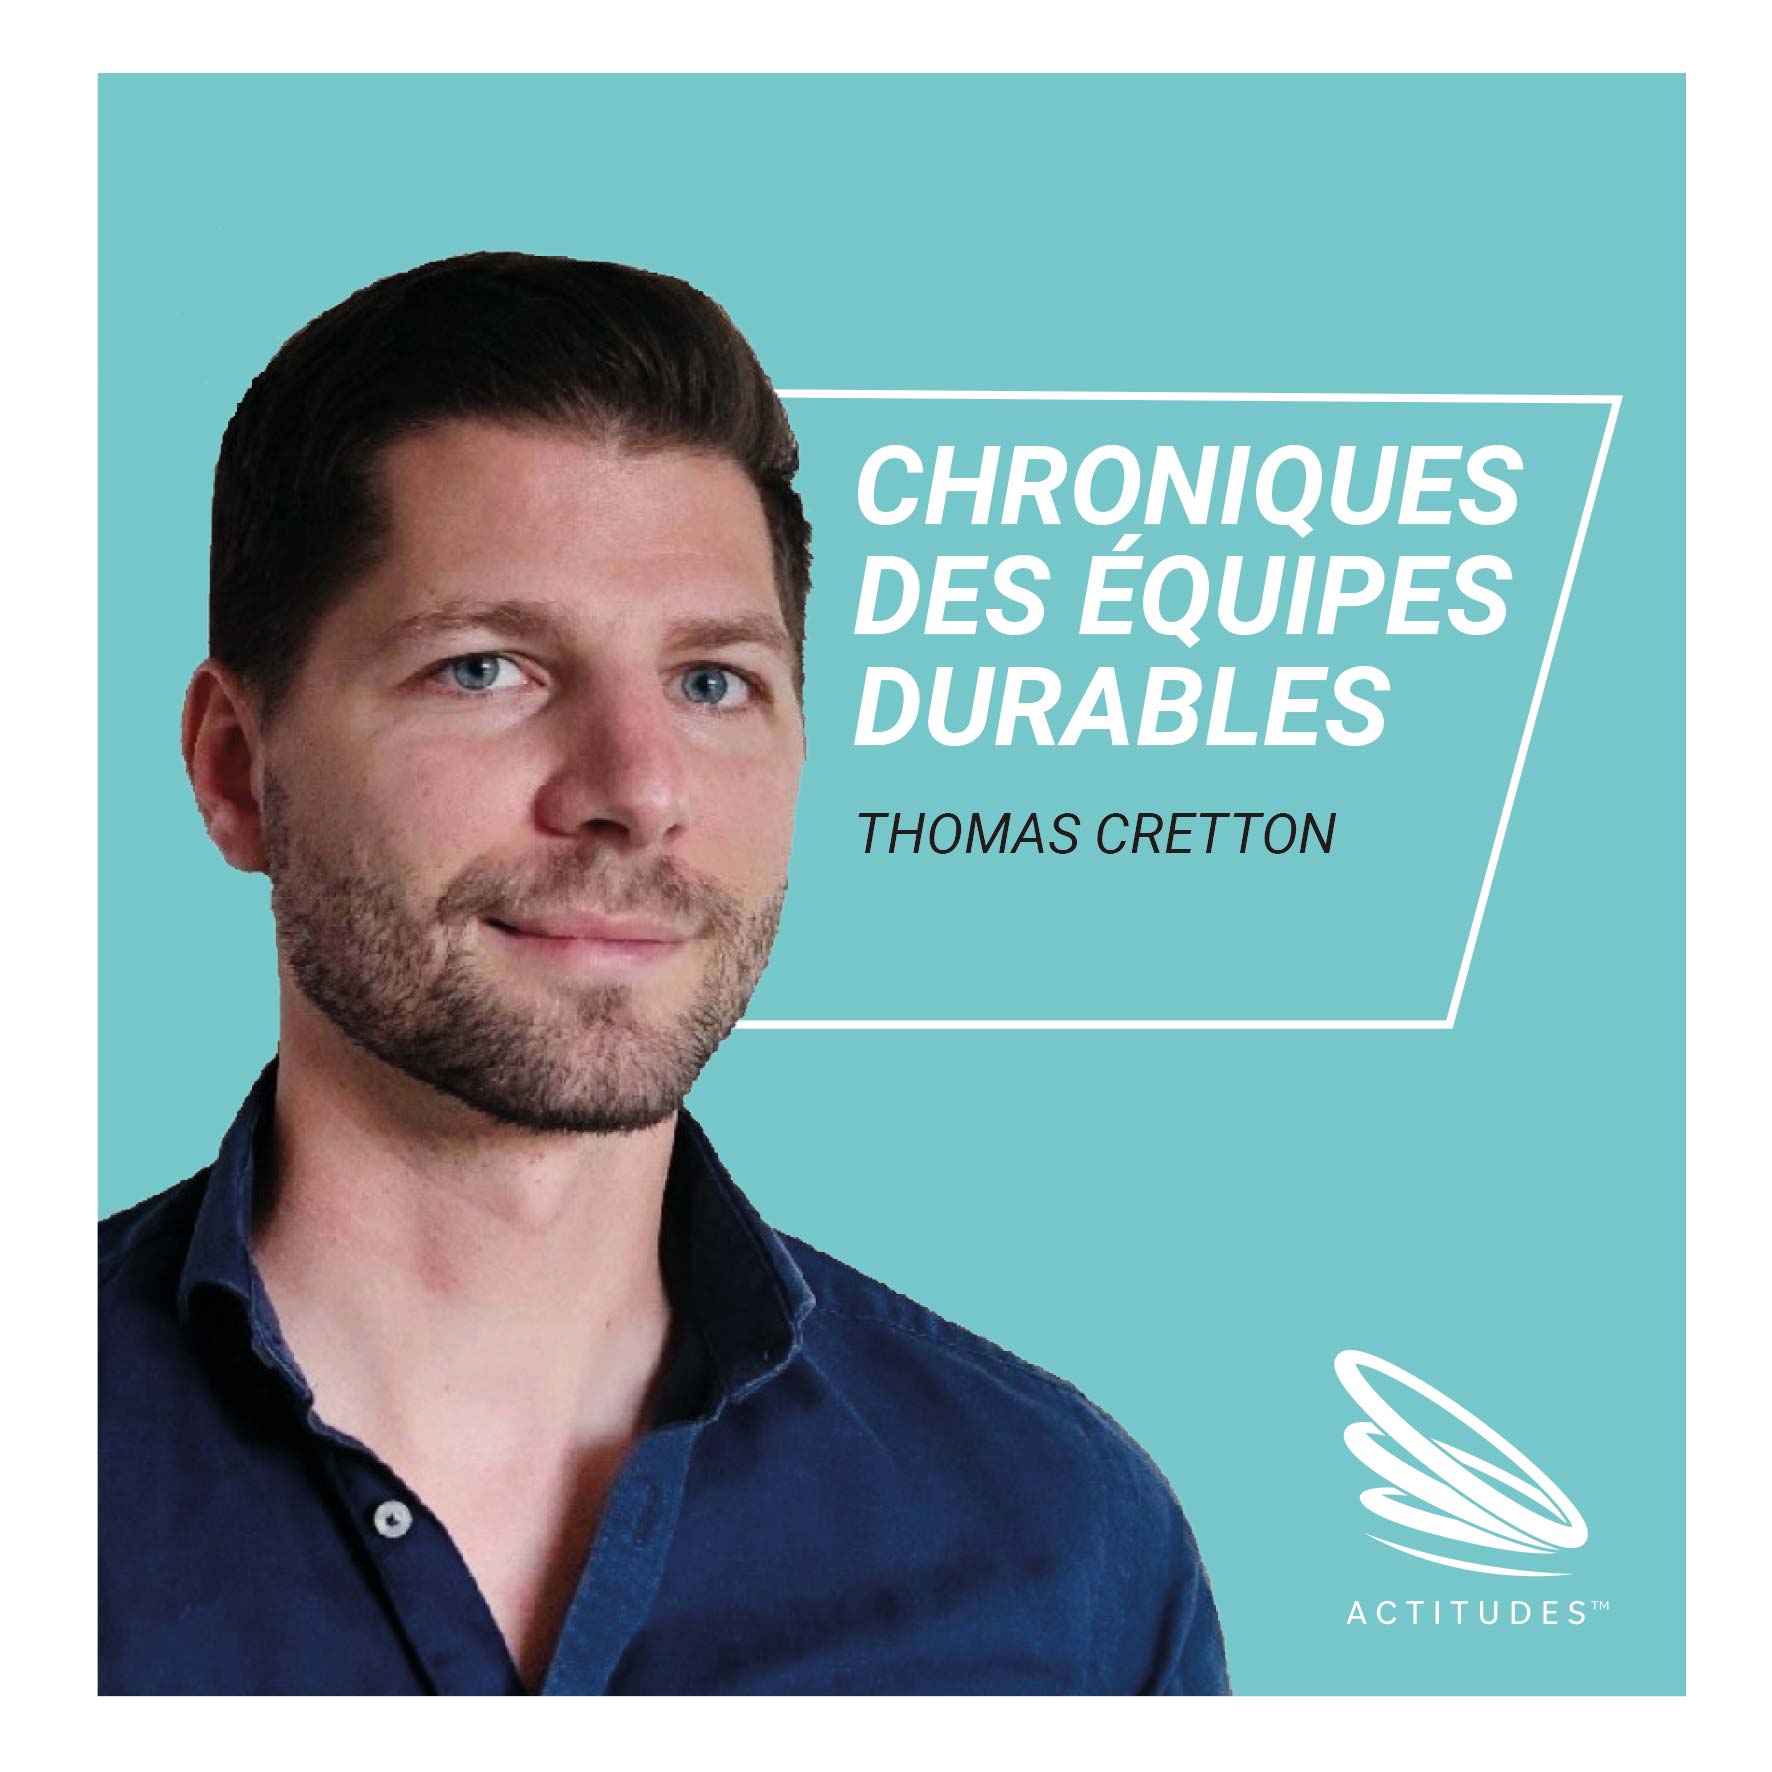 A tool for assessing team maturity: "Chronique des équipes durables" with Thomas Cretton